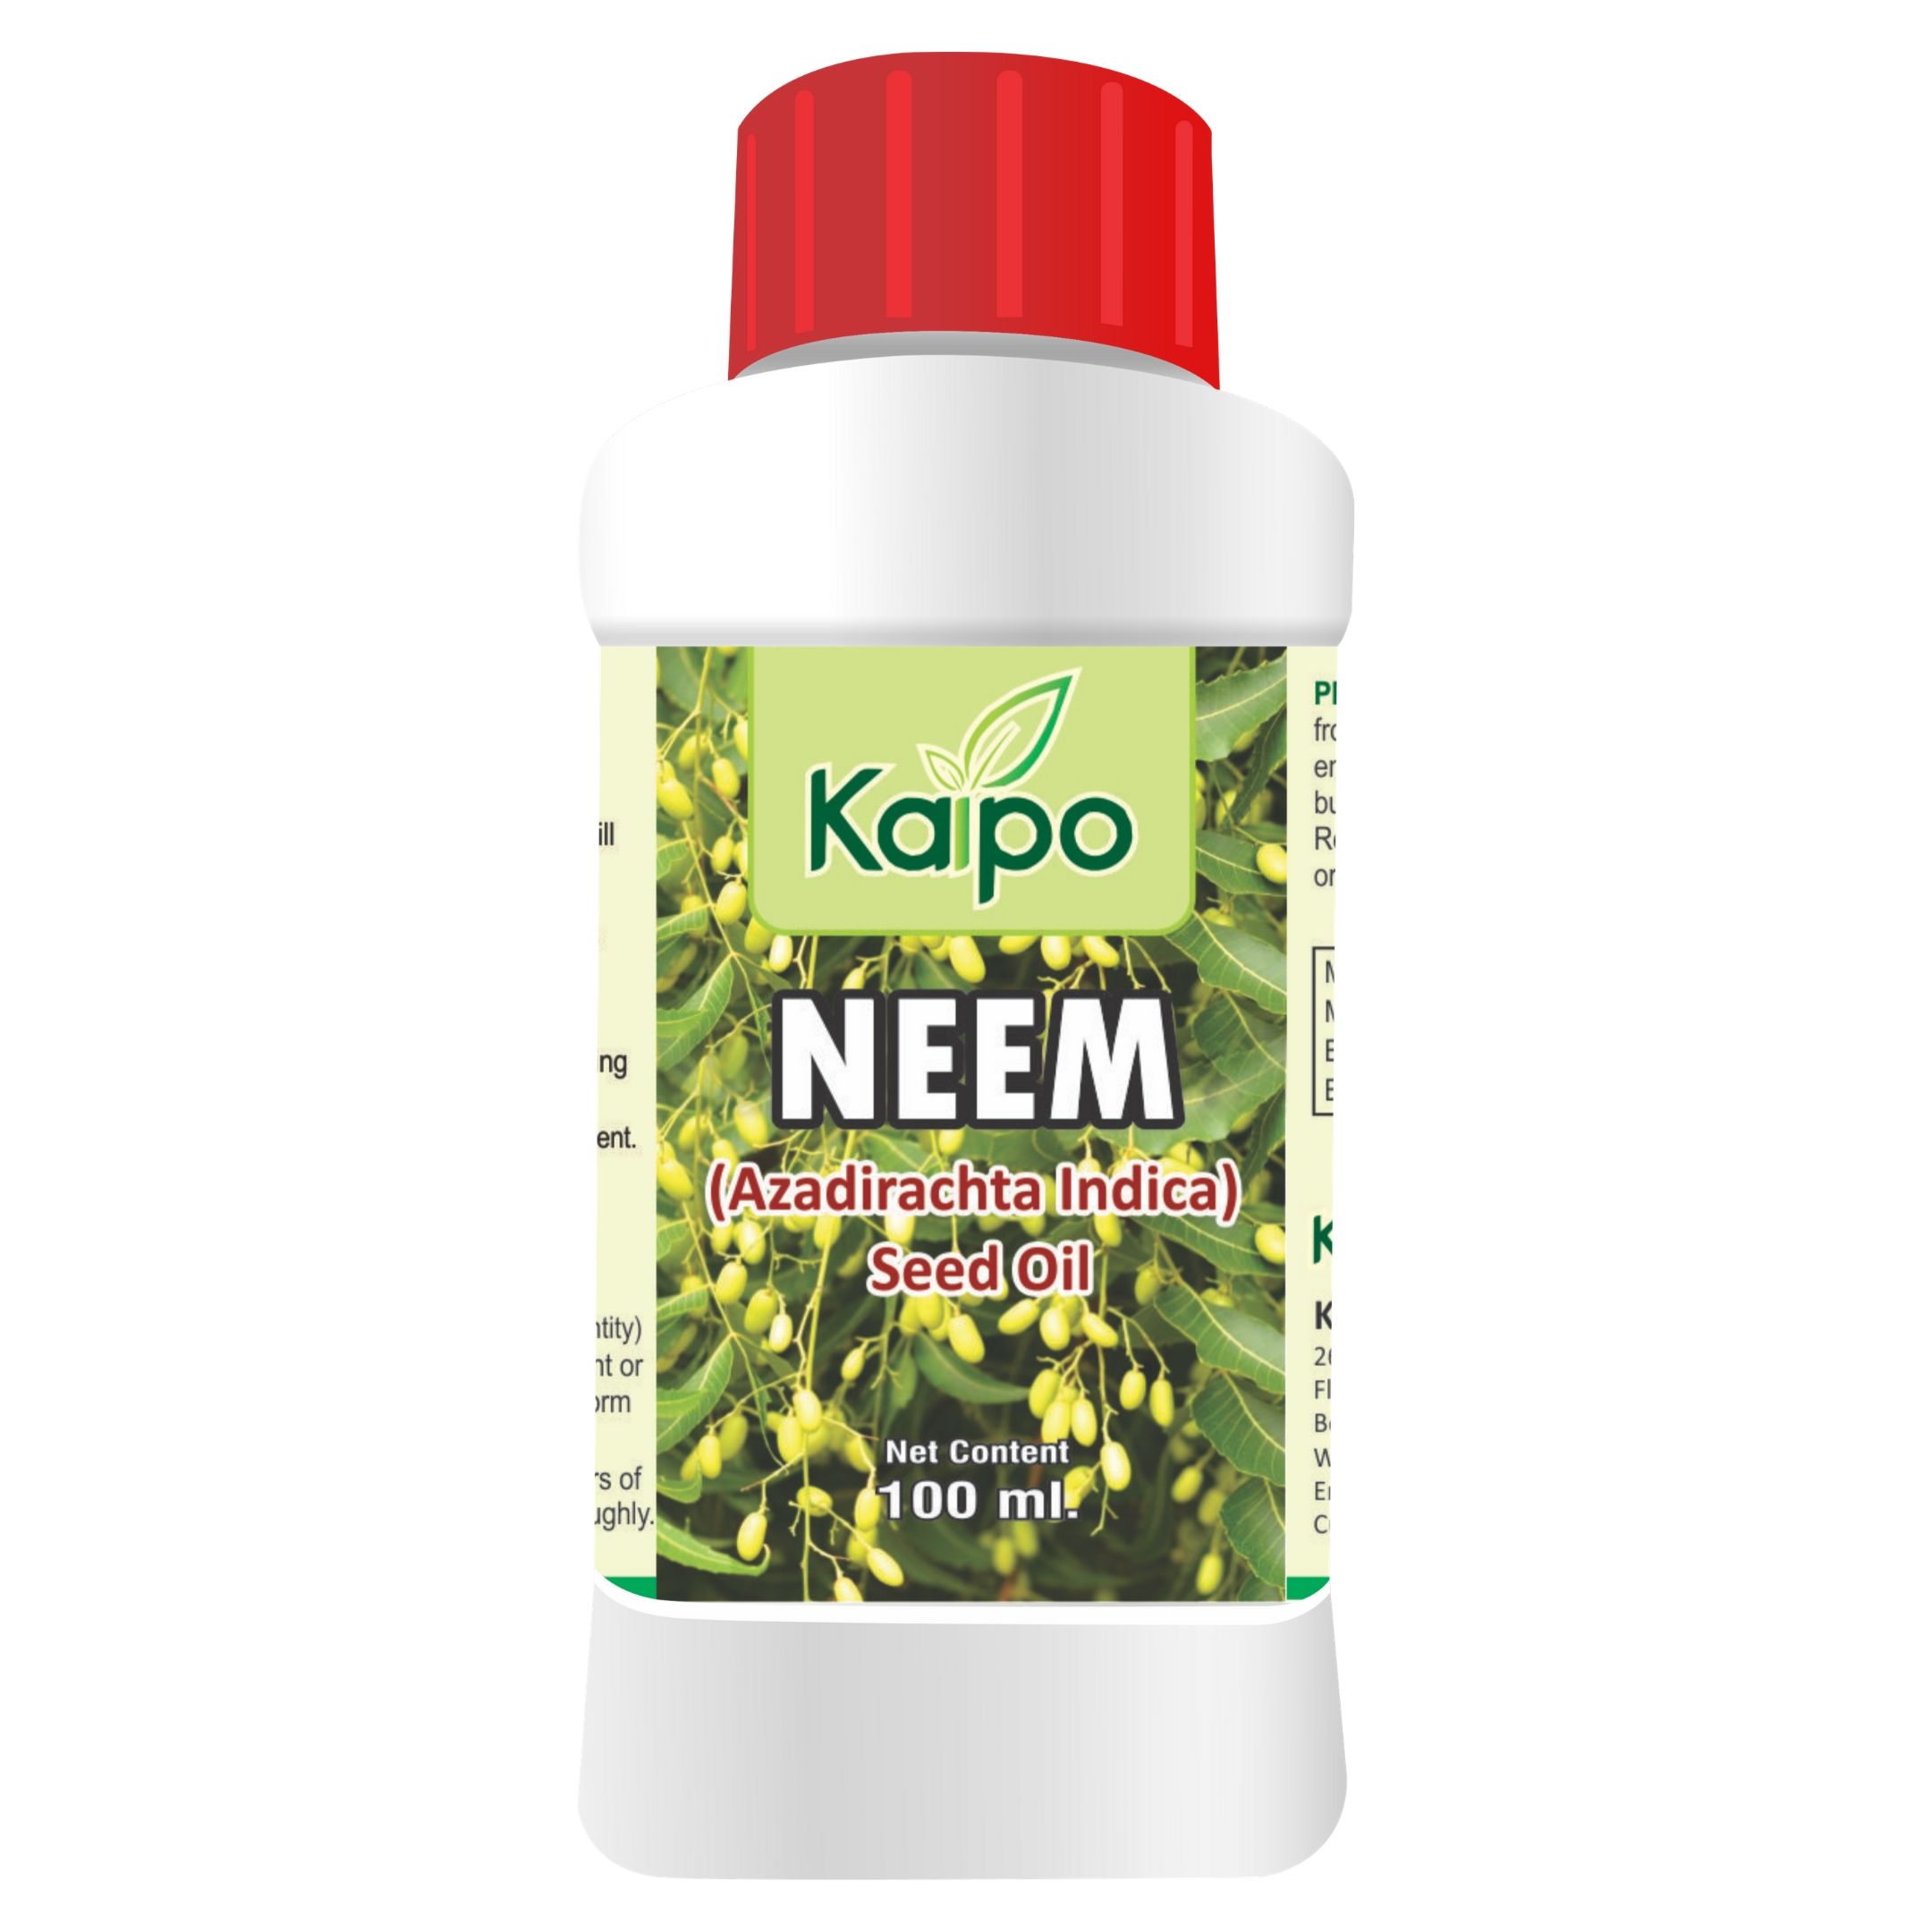 Kaipo Neem Oil